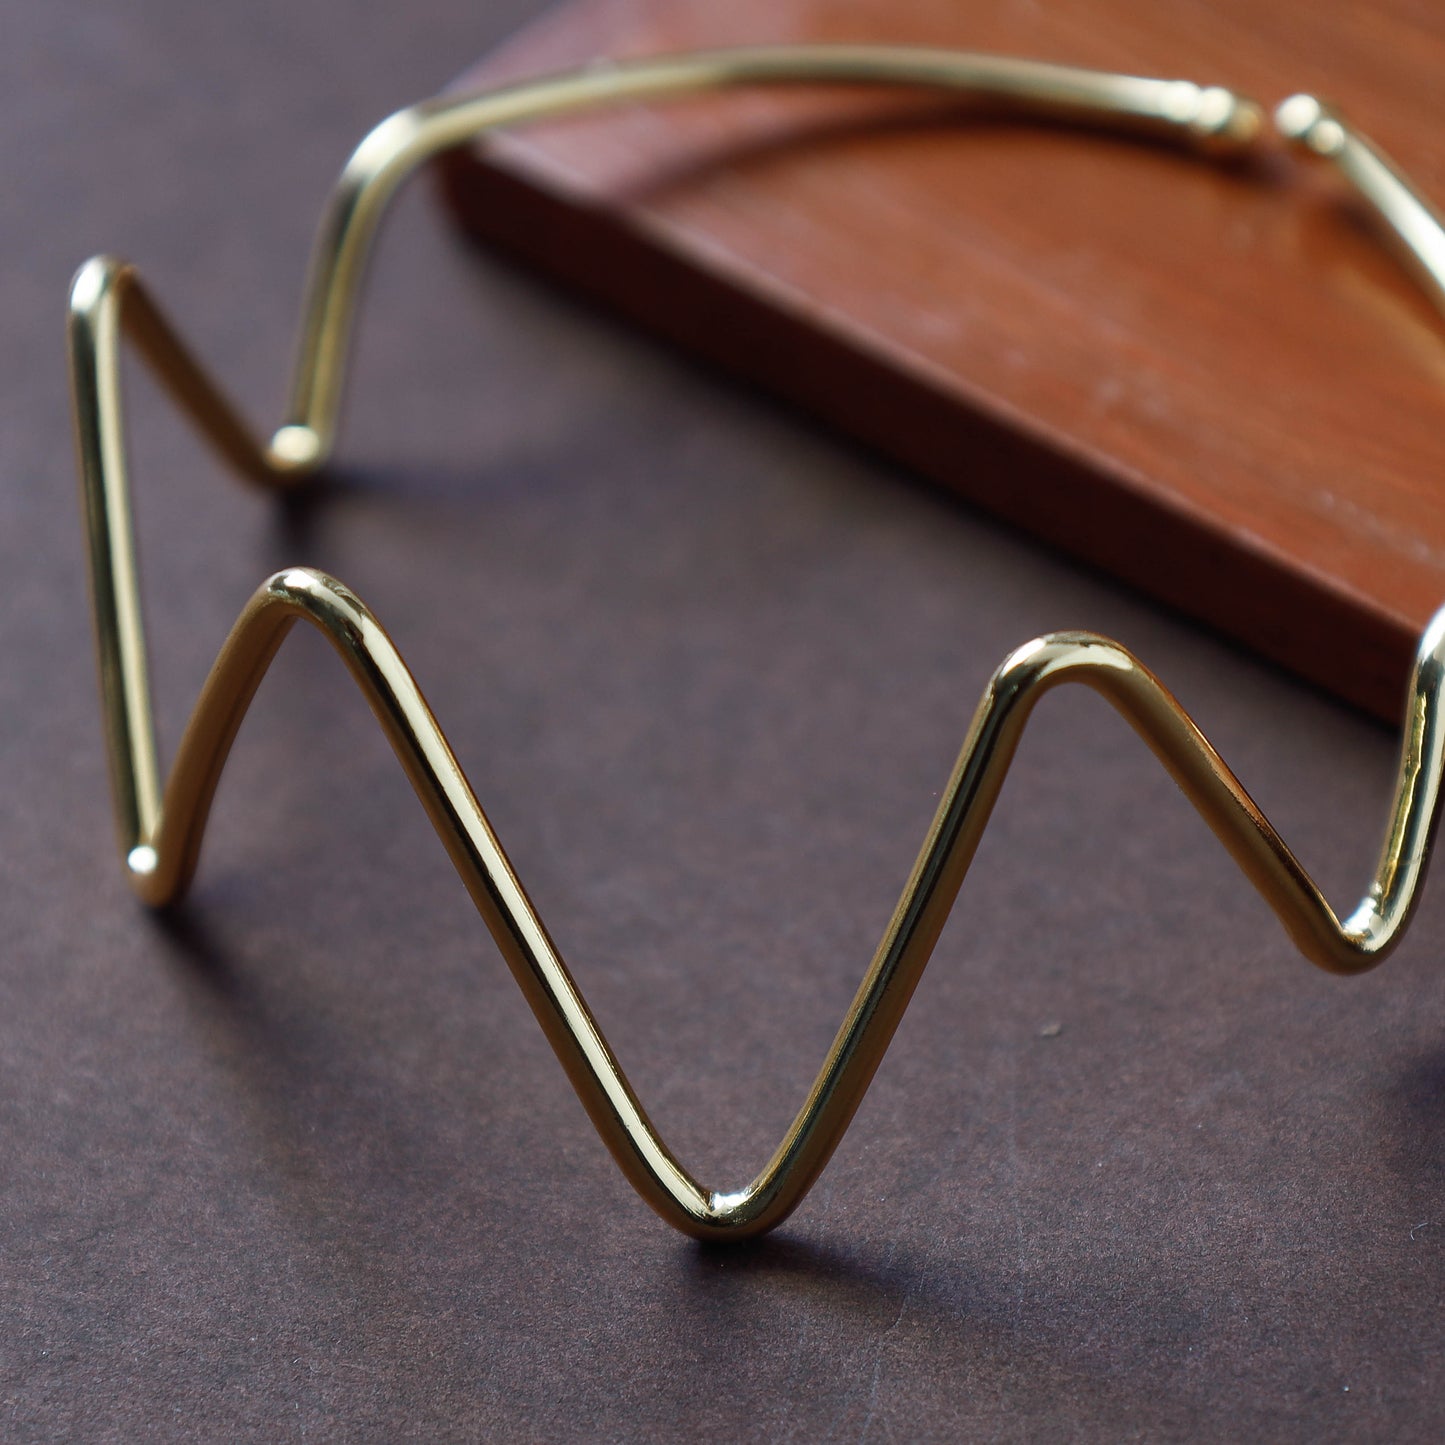 Brass Metal Handcrafted Bangle (Adjustable)